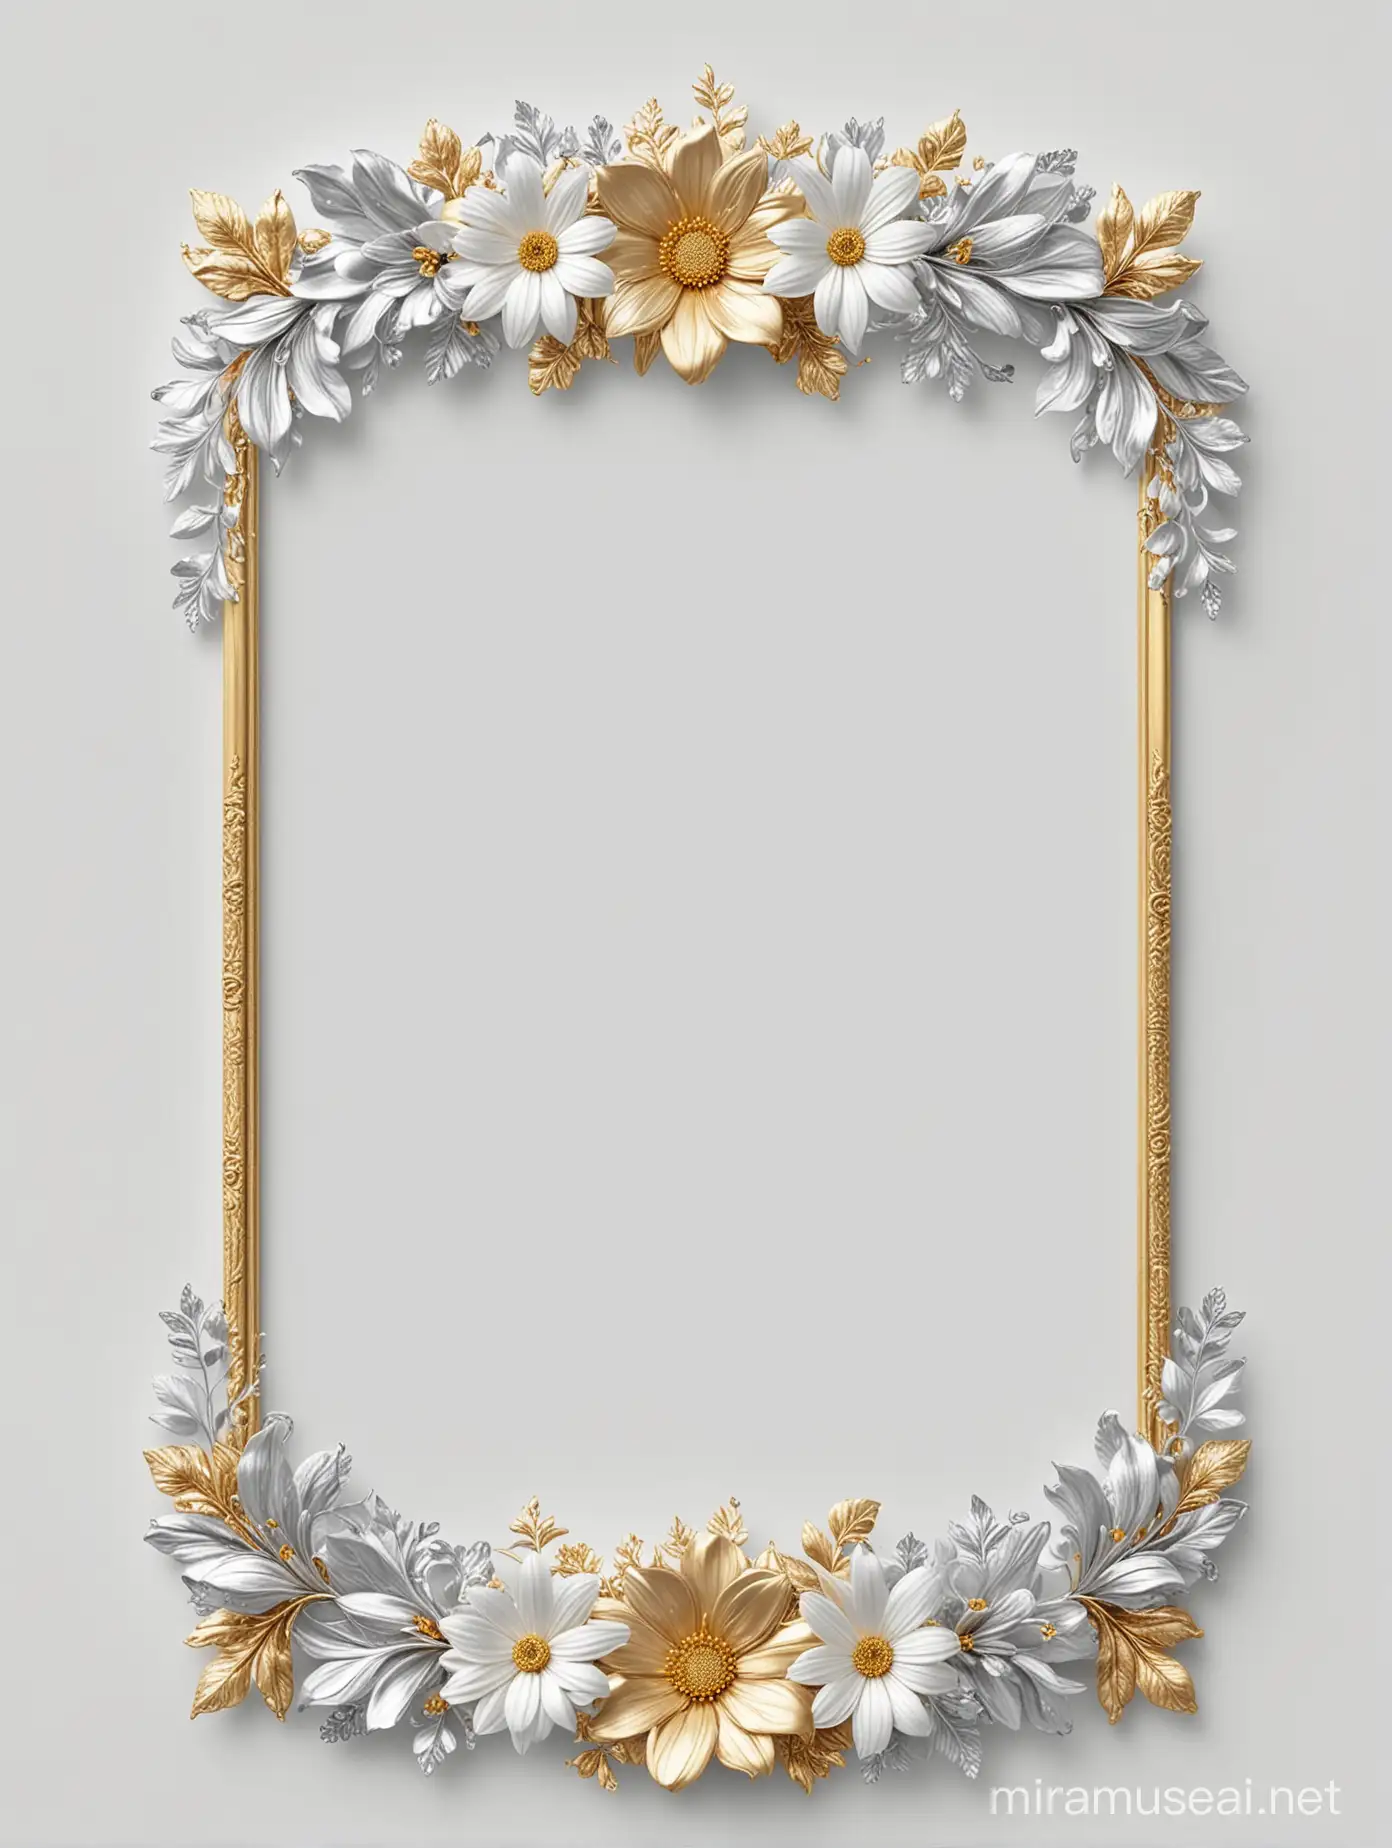 Elegant Gold and Silver Flower Frame on White Background